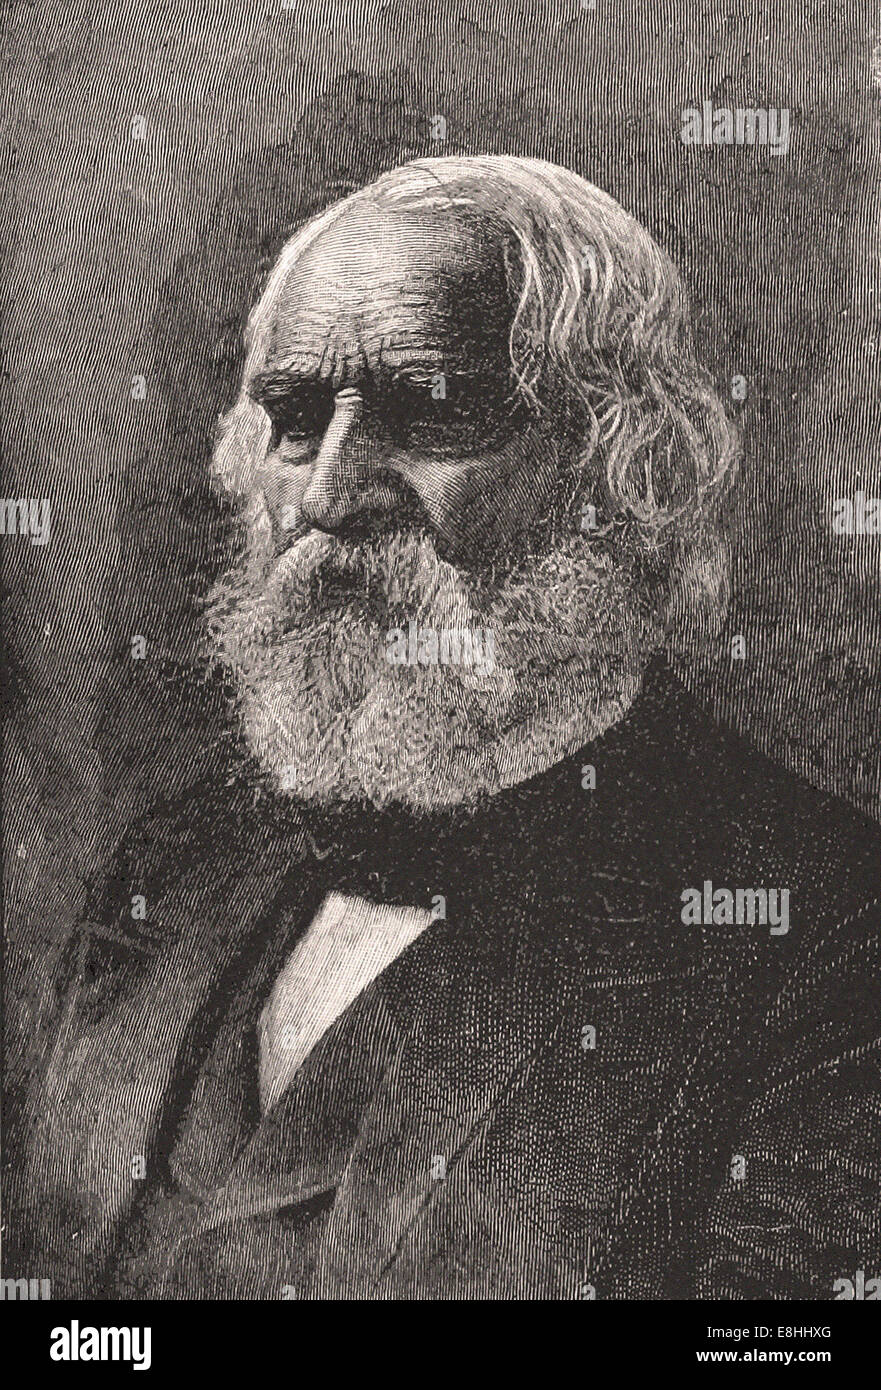 Porträt von Henry Wadsworth Longfellow - Gravur - XIX. Jahrhundert Stockfoto